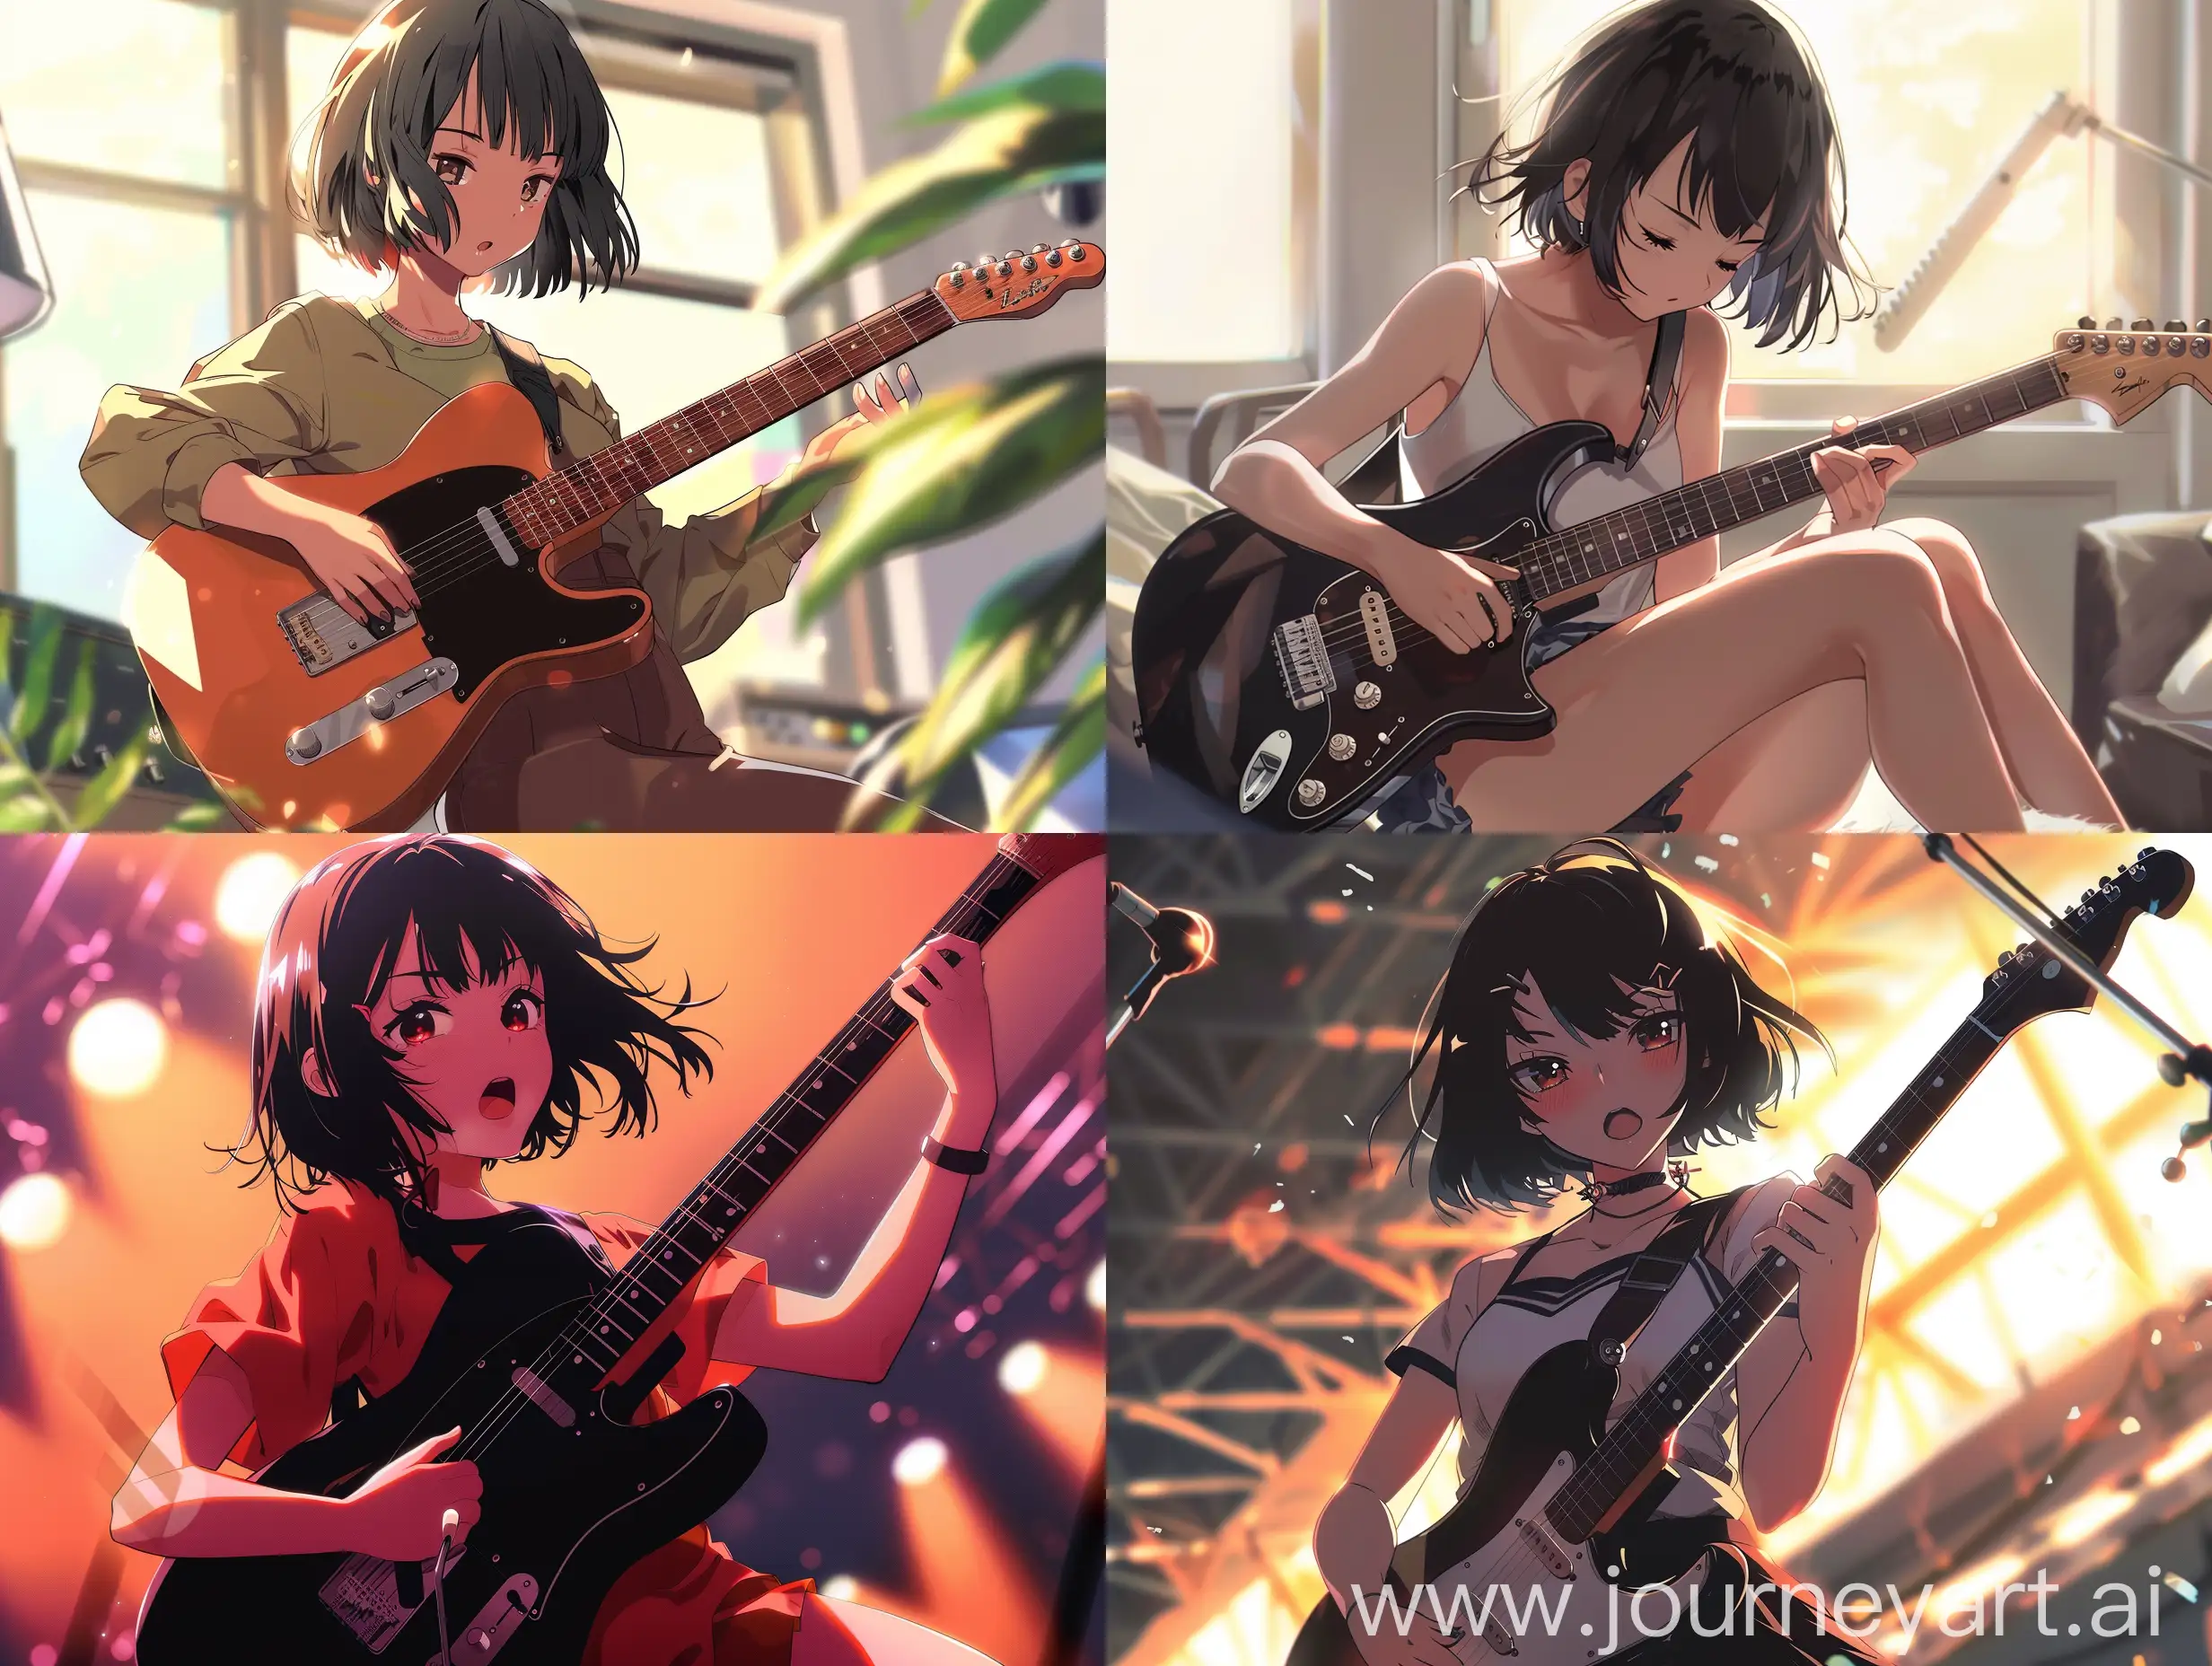 Anime-Girl-Playing-Guitar-with-Short-Black-Hair